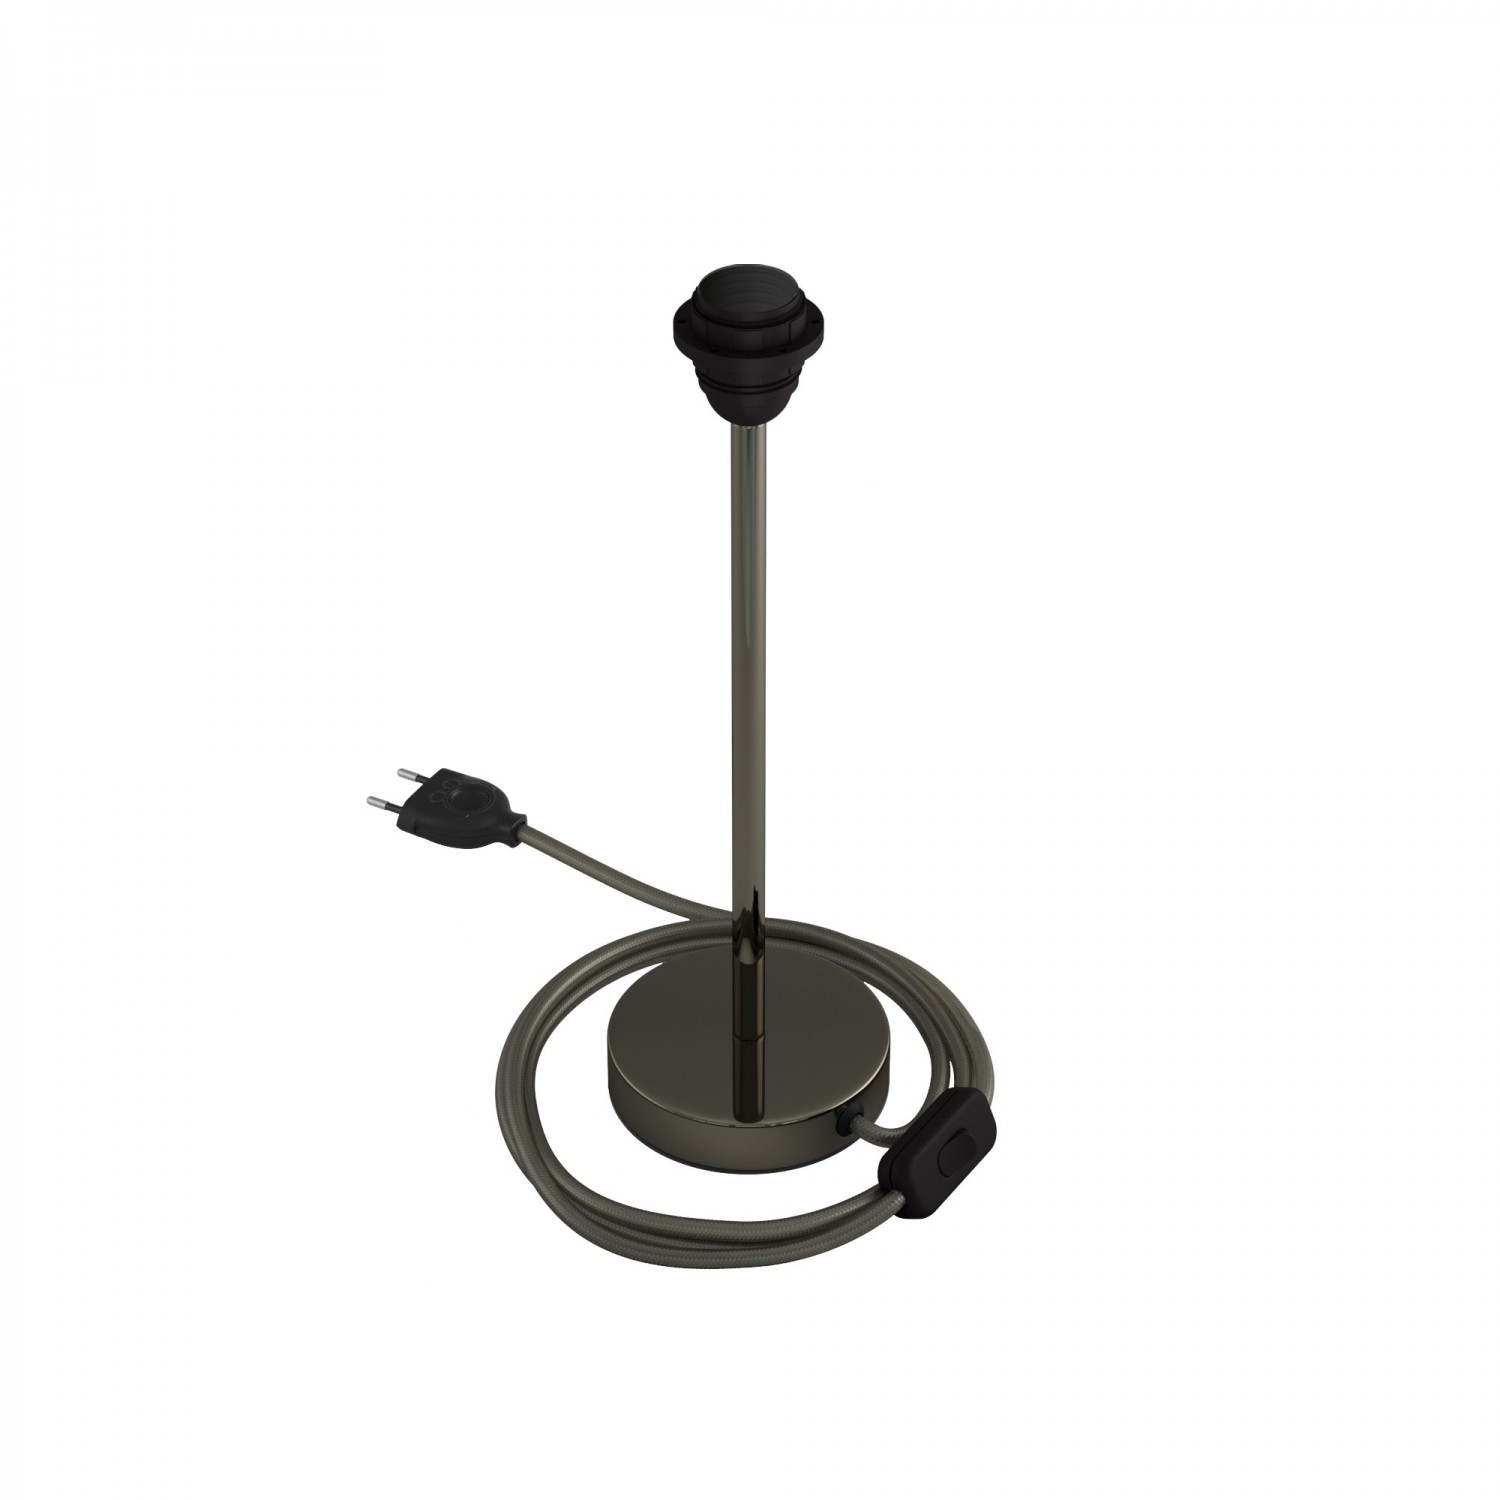 Alzaluce for lampshade - Metal table lamp